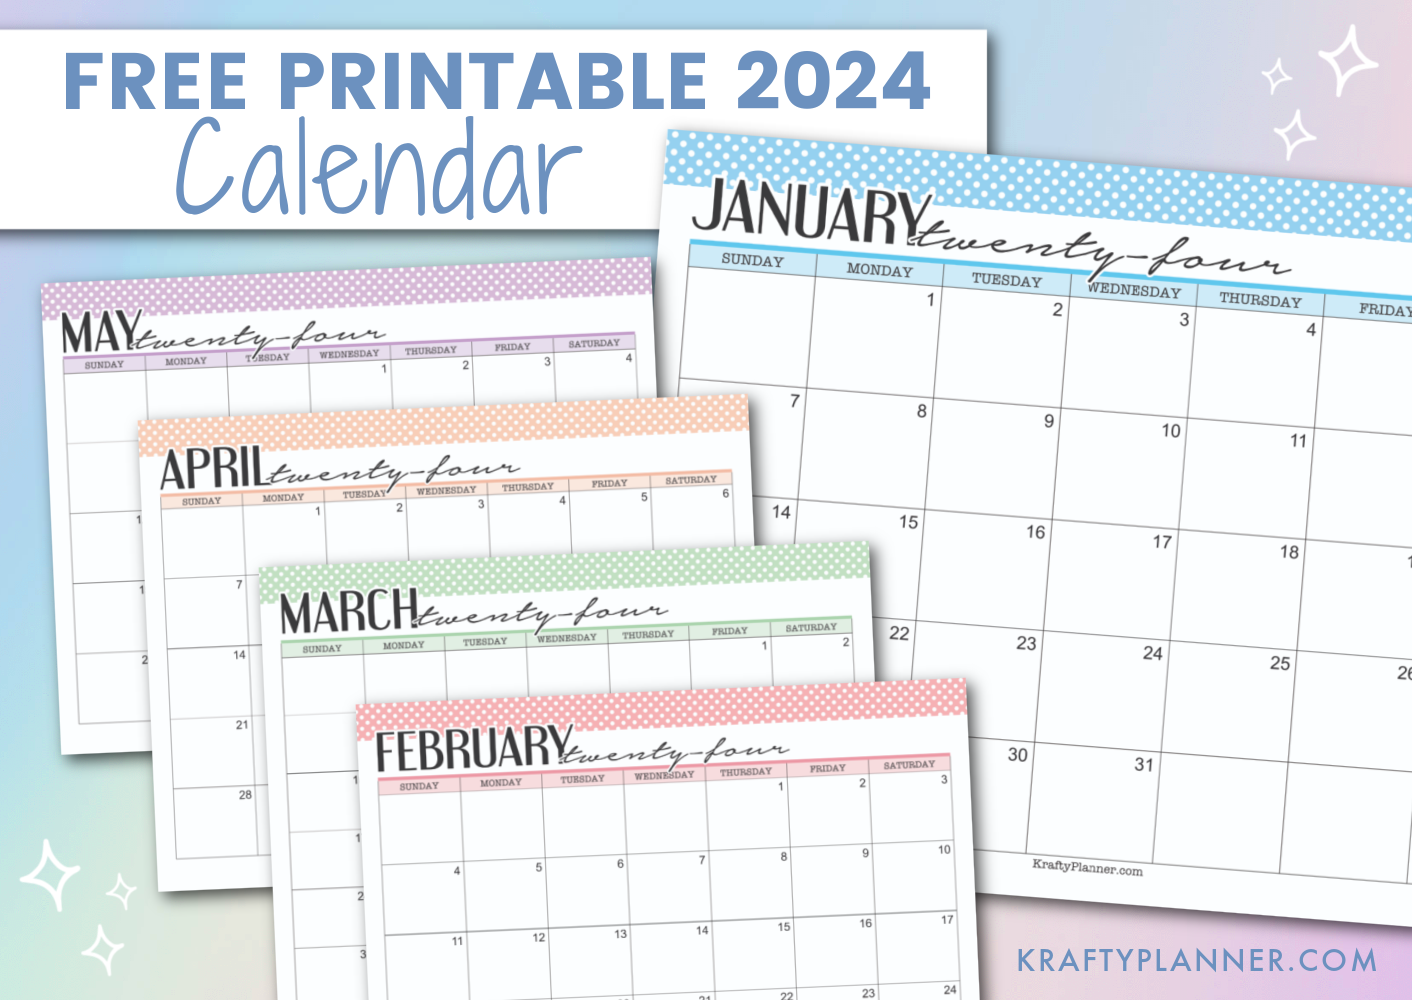 Free Printable 2024 Calendars (Color) — Krafty Planner with Free Printable Calendar 2024 Colorful